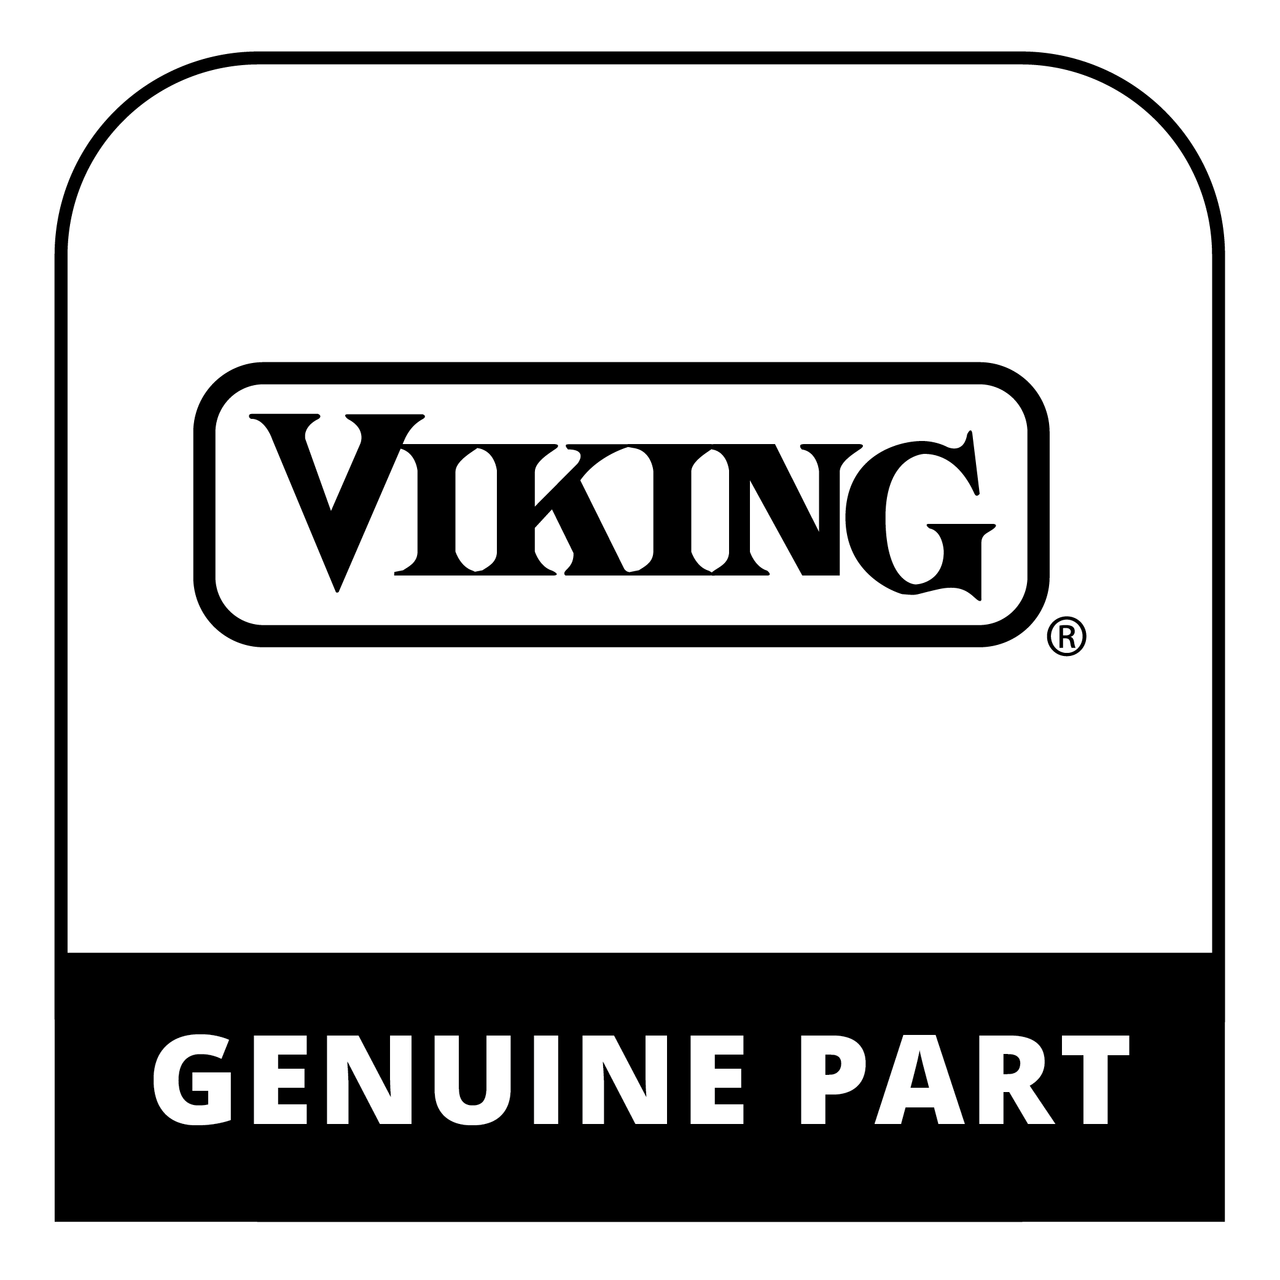 Viking 071011-402 - Asm, Weldment, Box, Burner, Evgr530-Bk - Genuine Viking Part